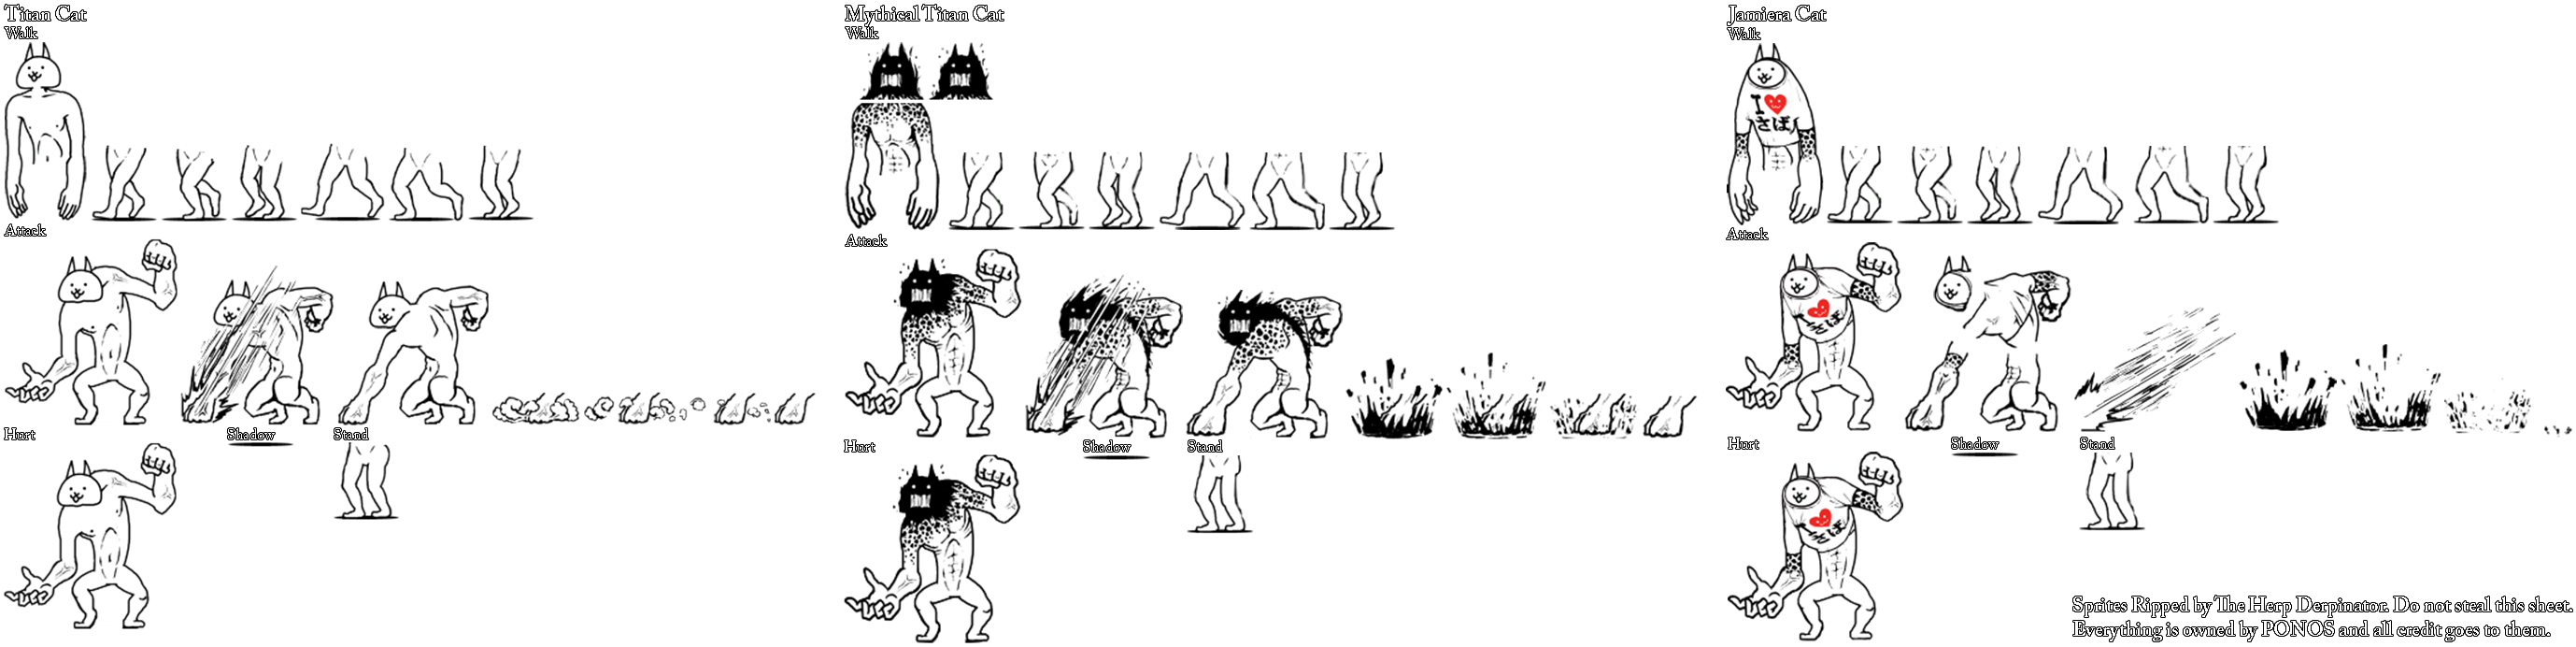 The Battle Cats - Titan Cat